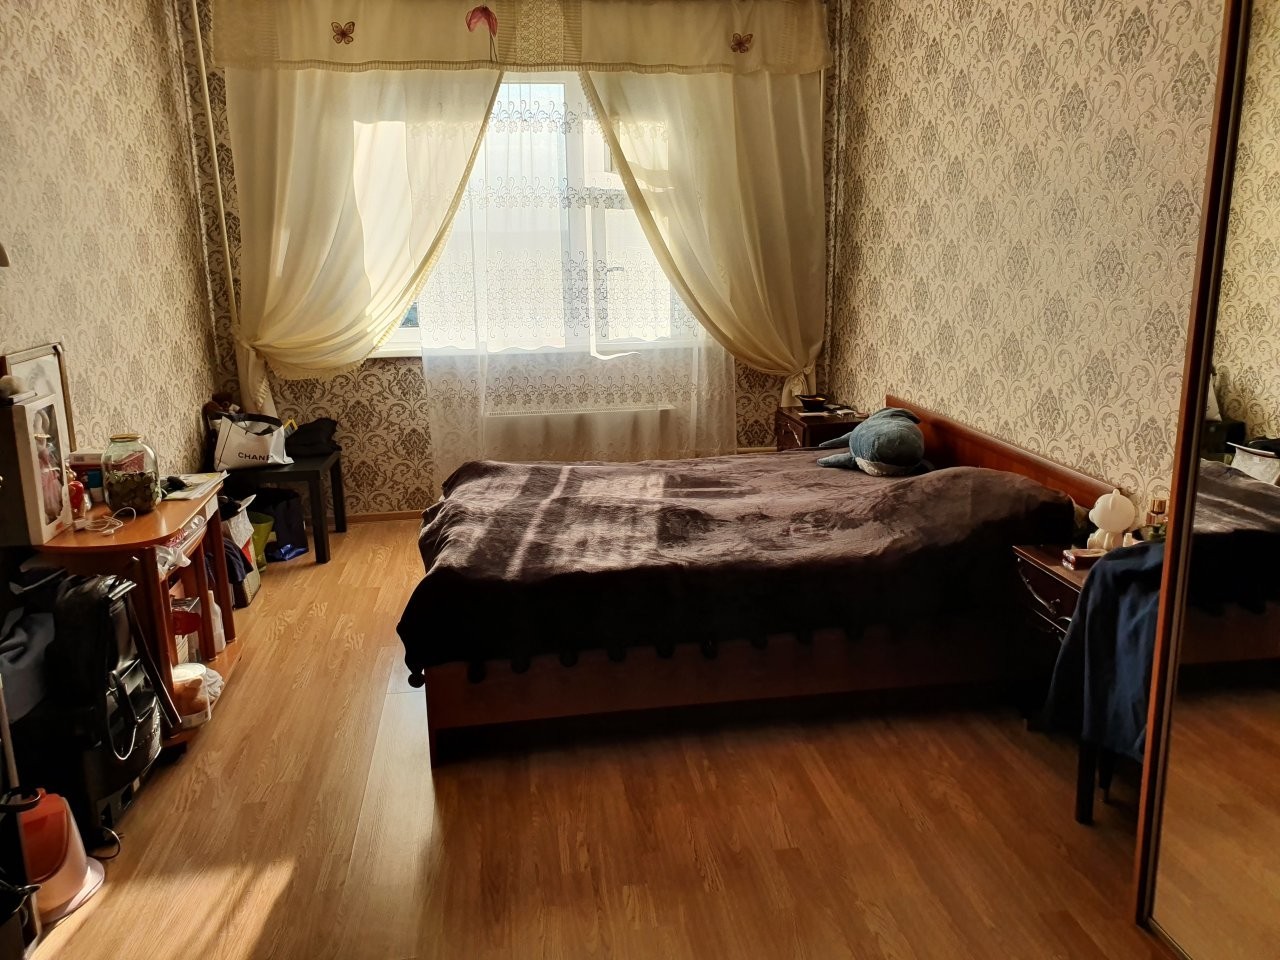 1 ру комната. Трехкомнатная квартира в Кузнечиках Подольск.